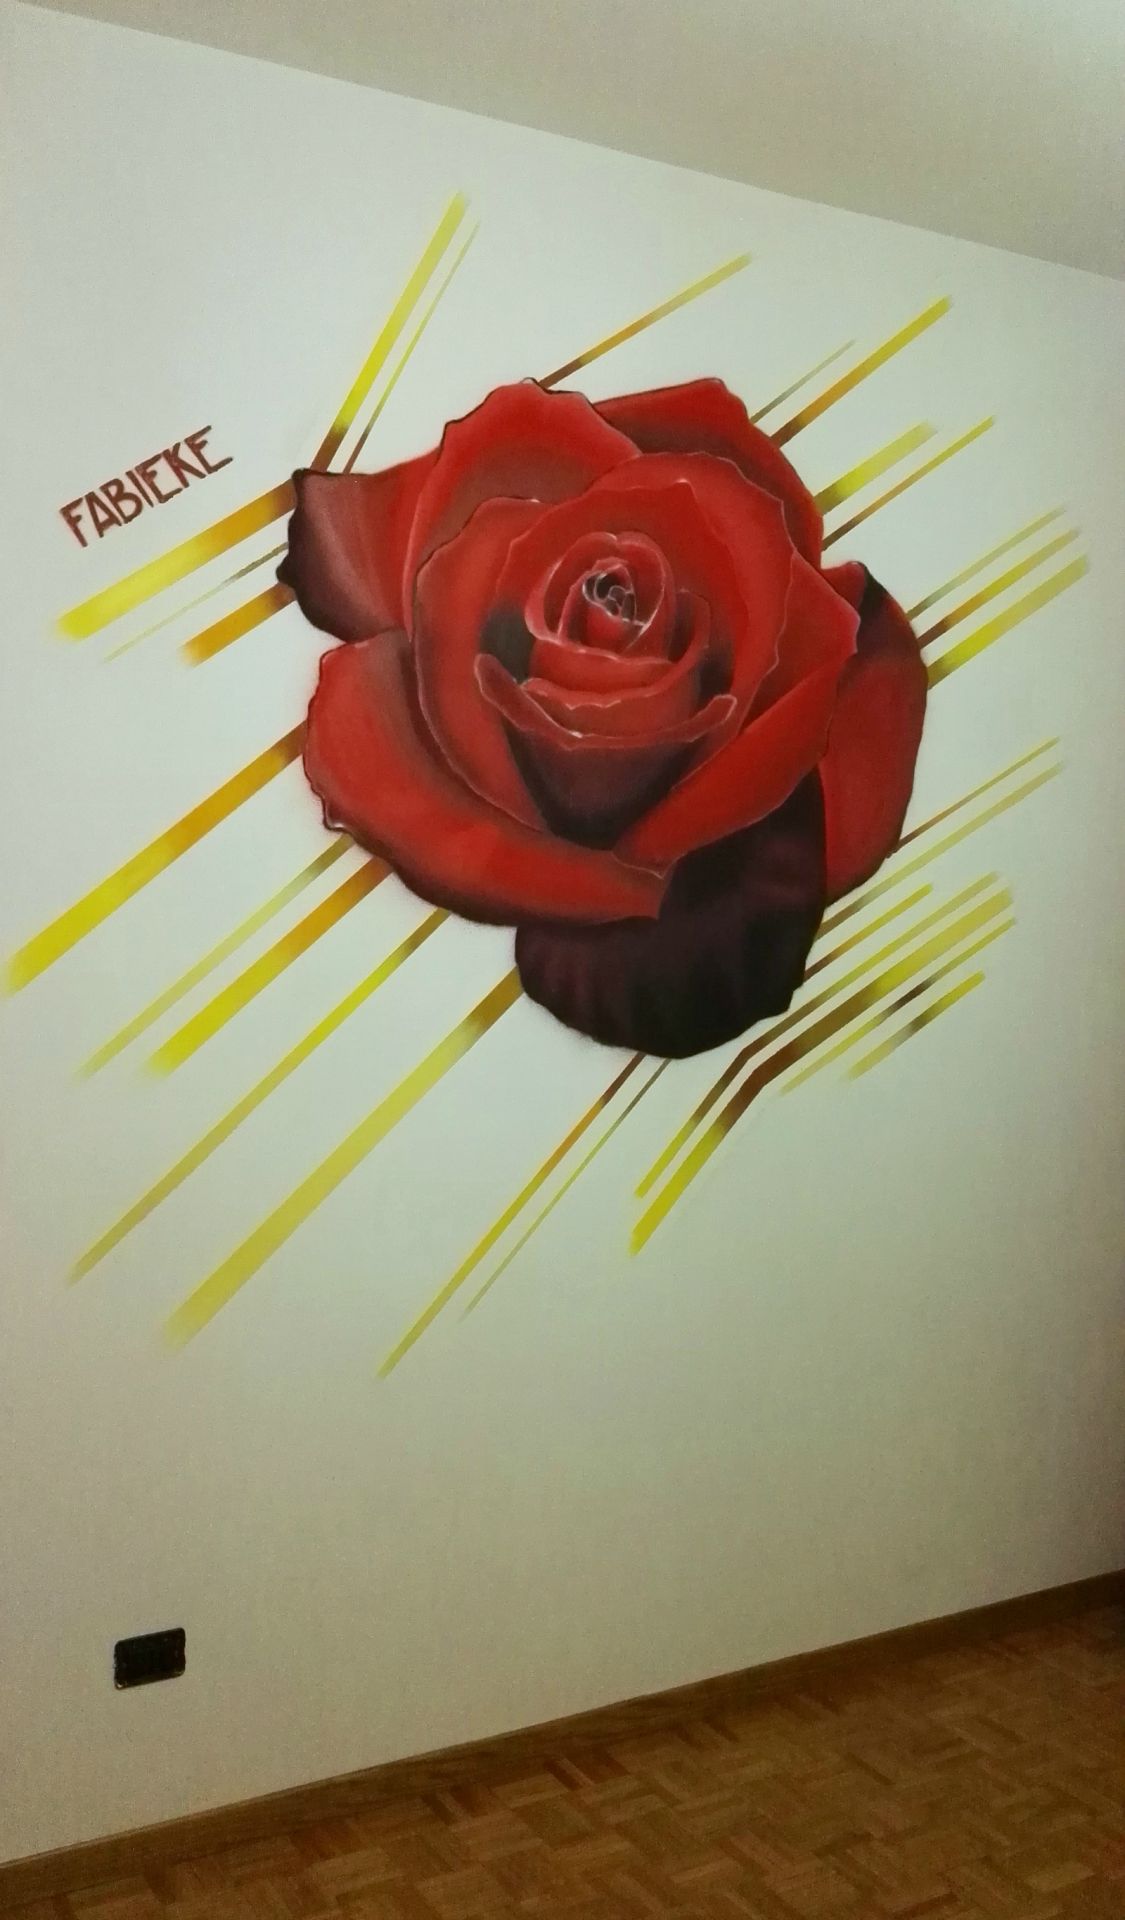 Sara's rose